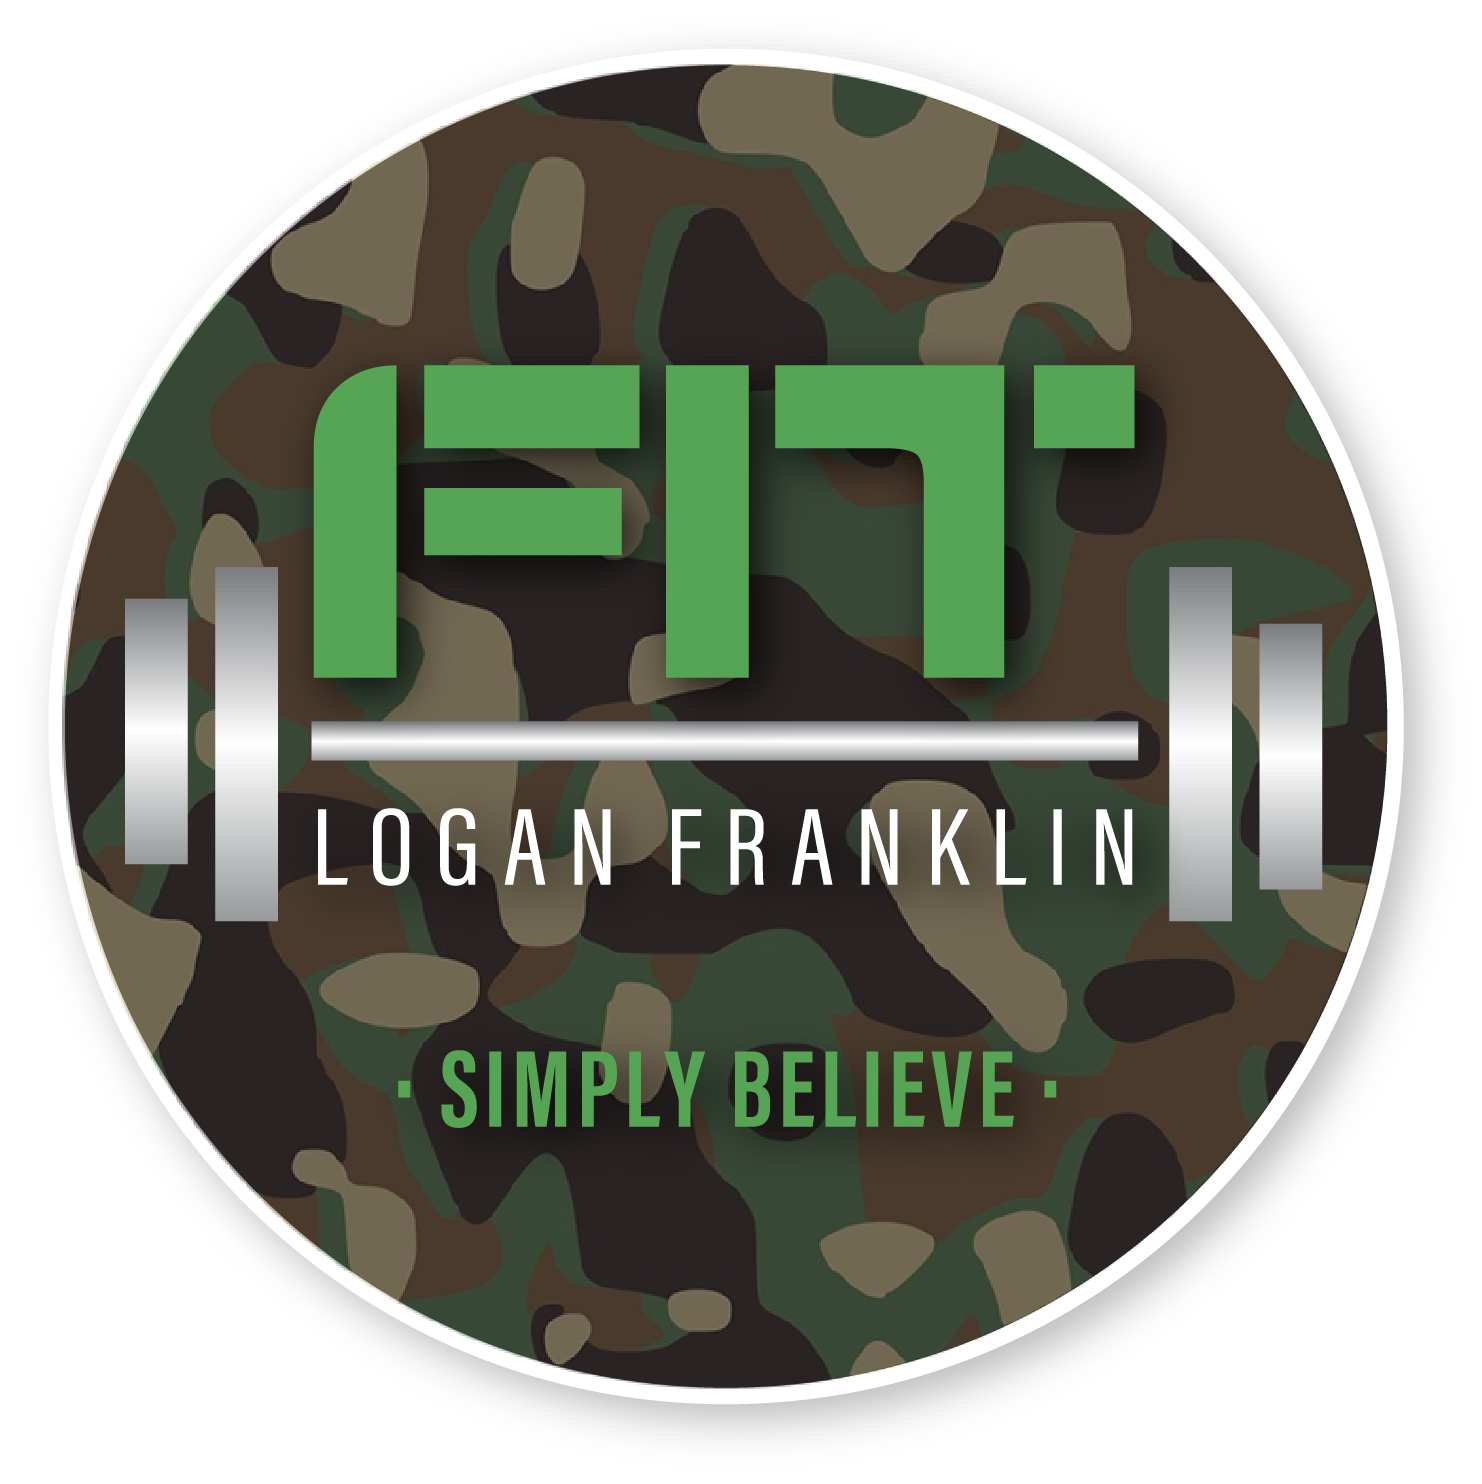 Logan Franklin